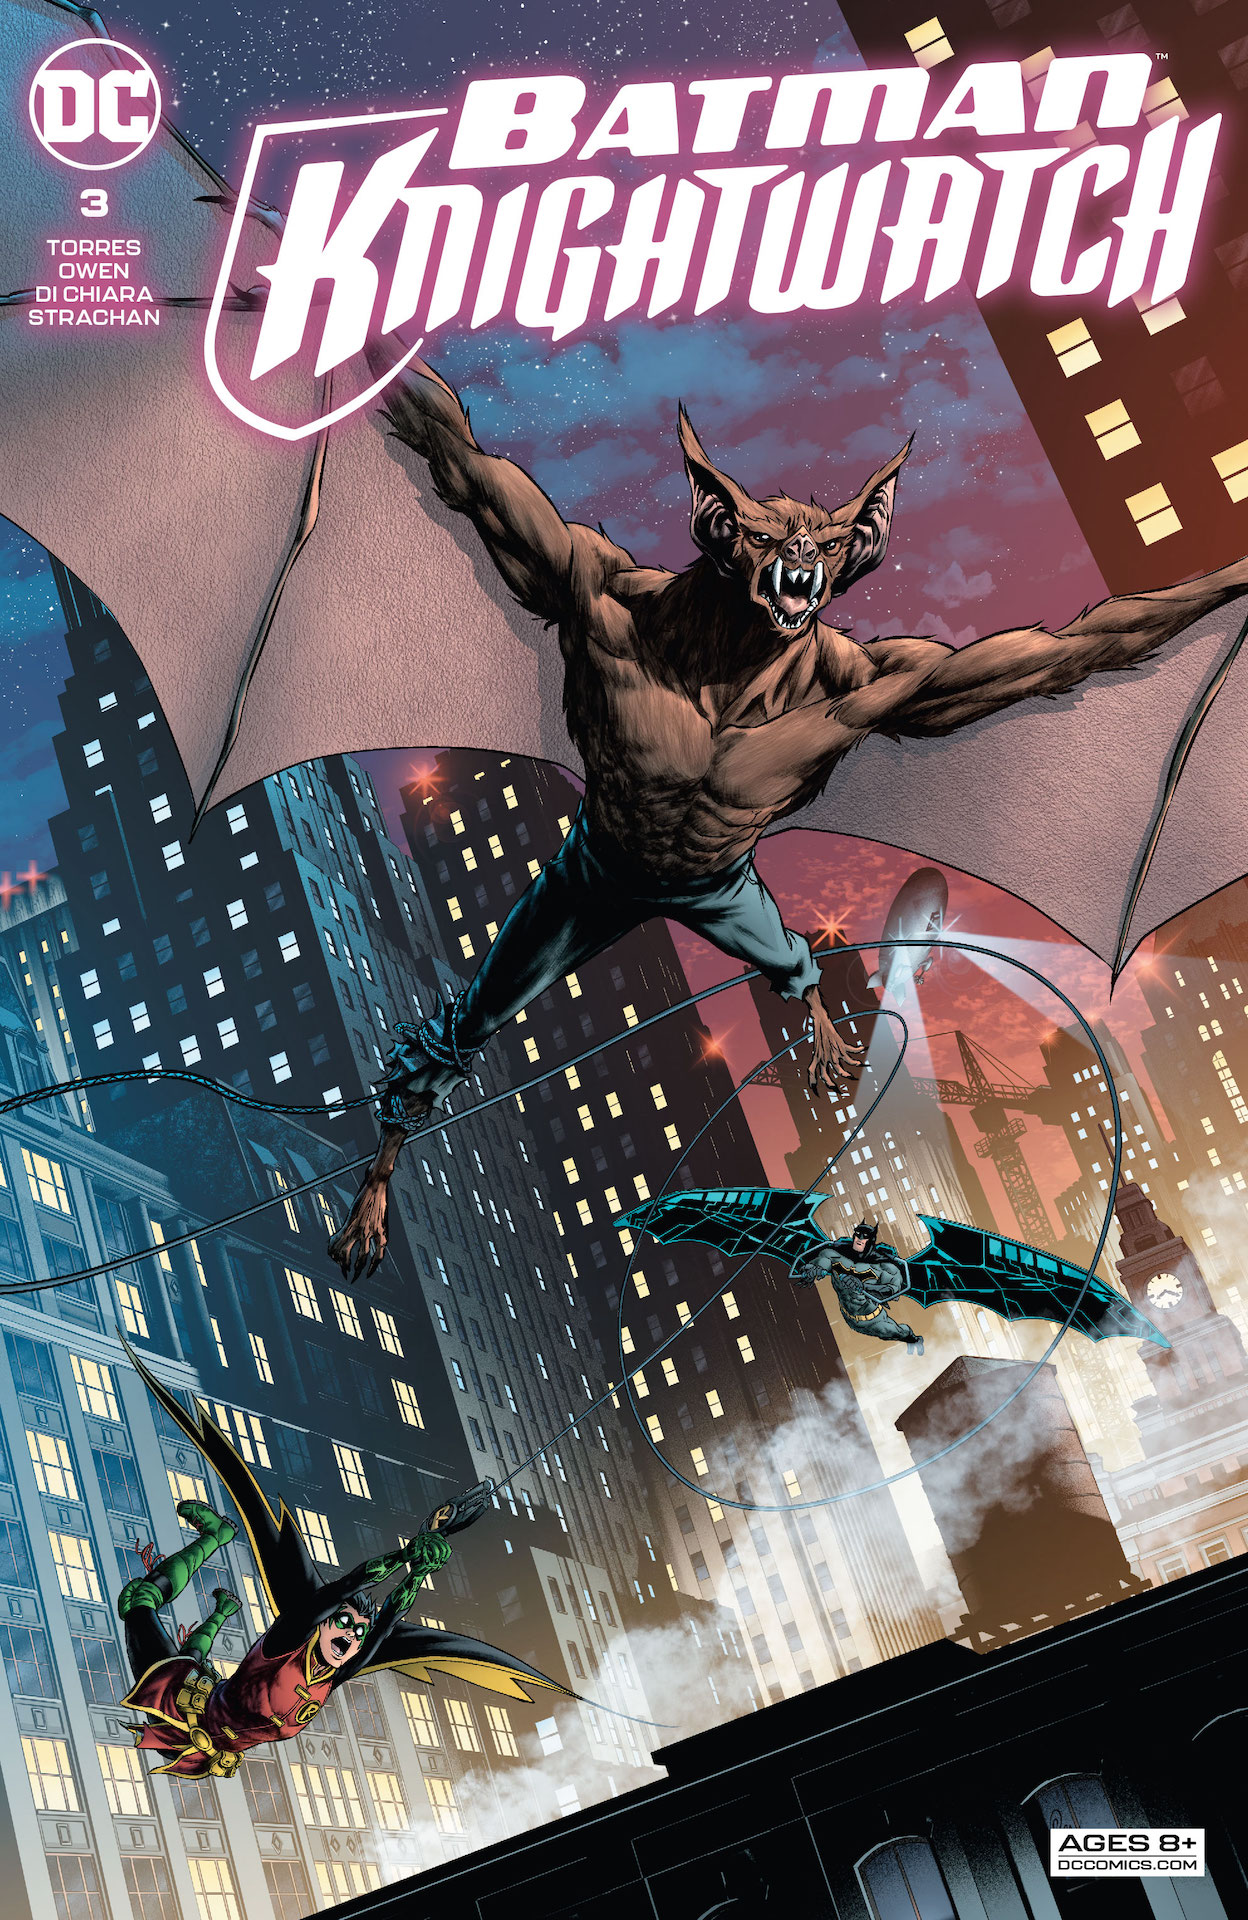 DC Preview: Batman: Knightwatch #3